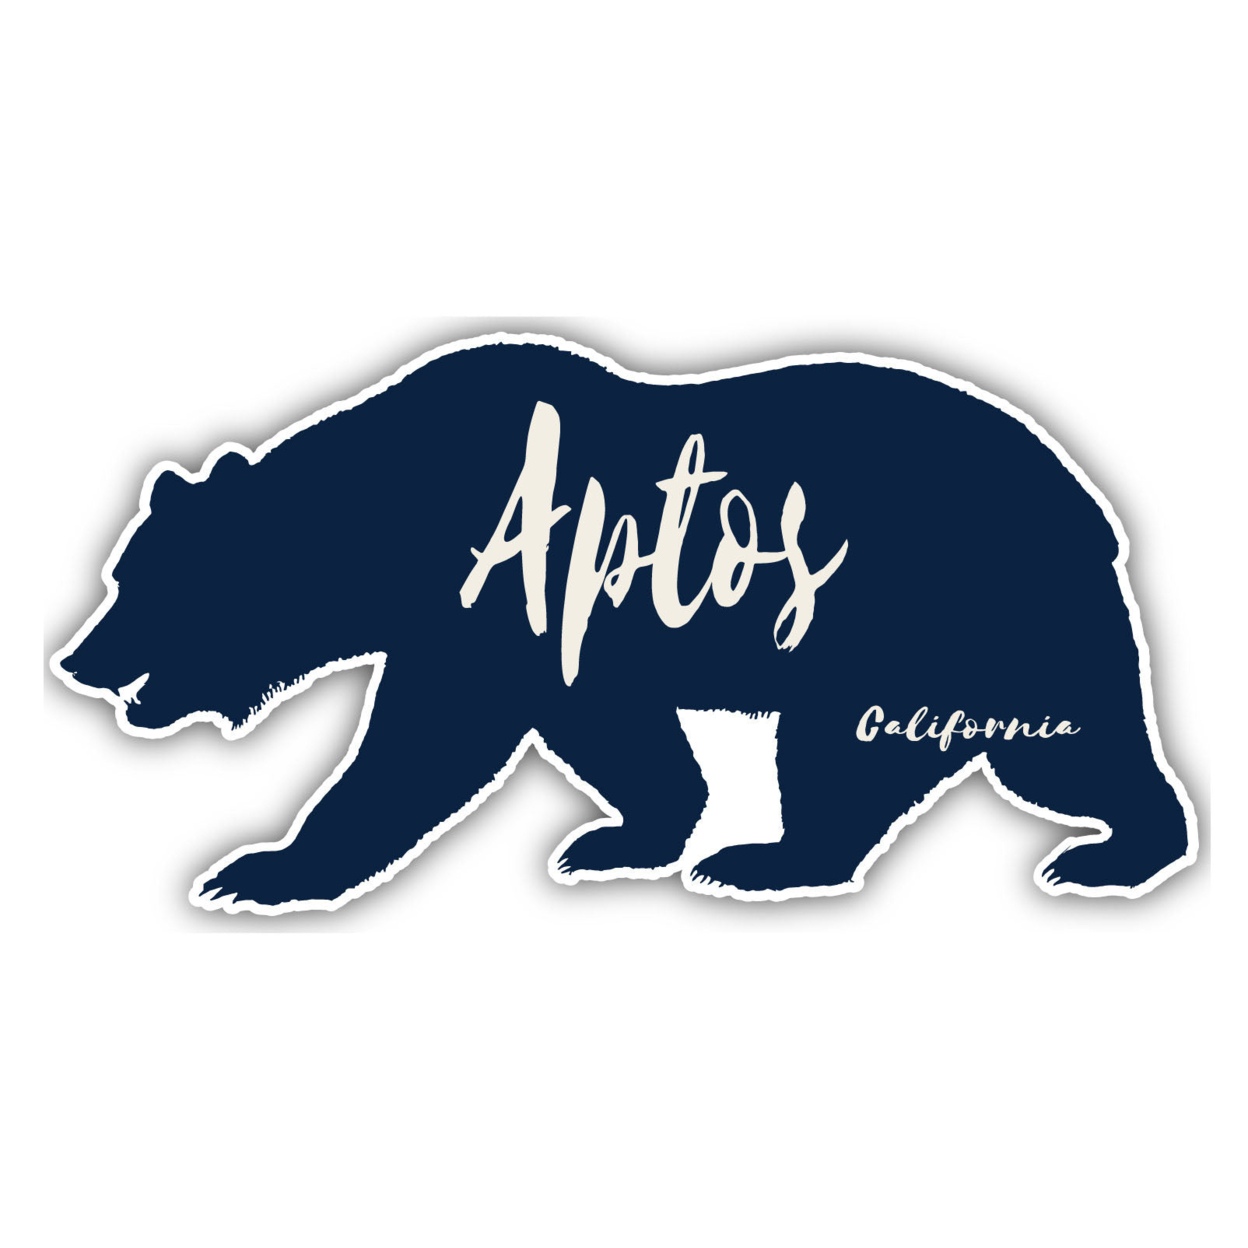 Aptos California Souvenir Decorative Stickers (Choose Theme And Size) - Single Unit, 8-Inch, Bear